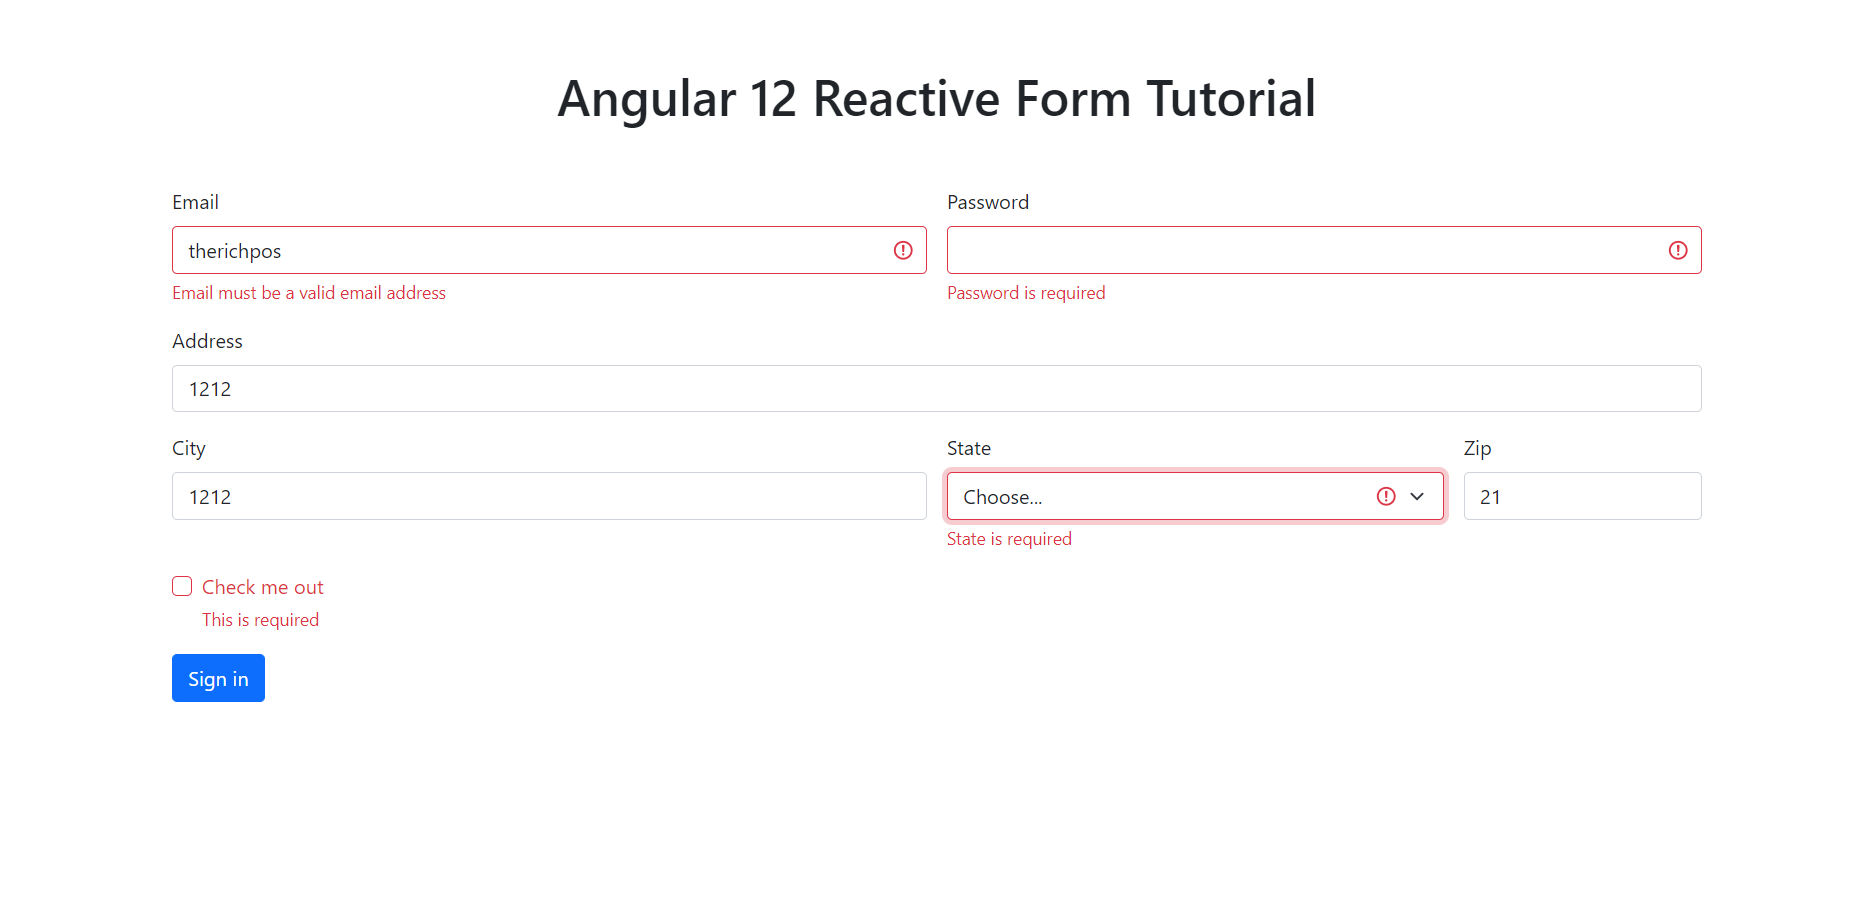 Angular 12 Reactive Form Tutorial